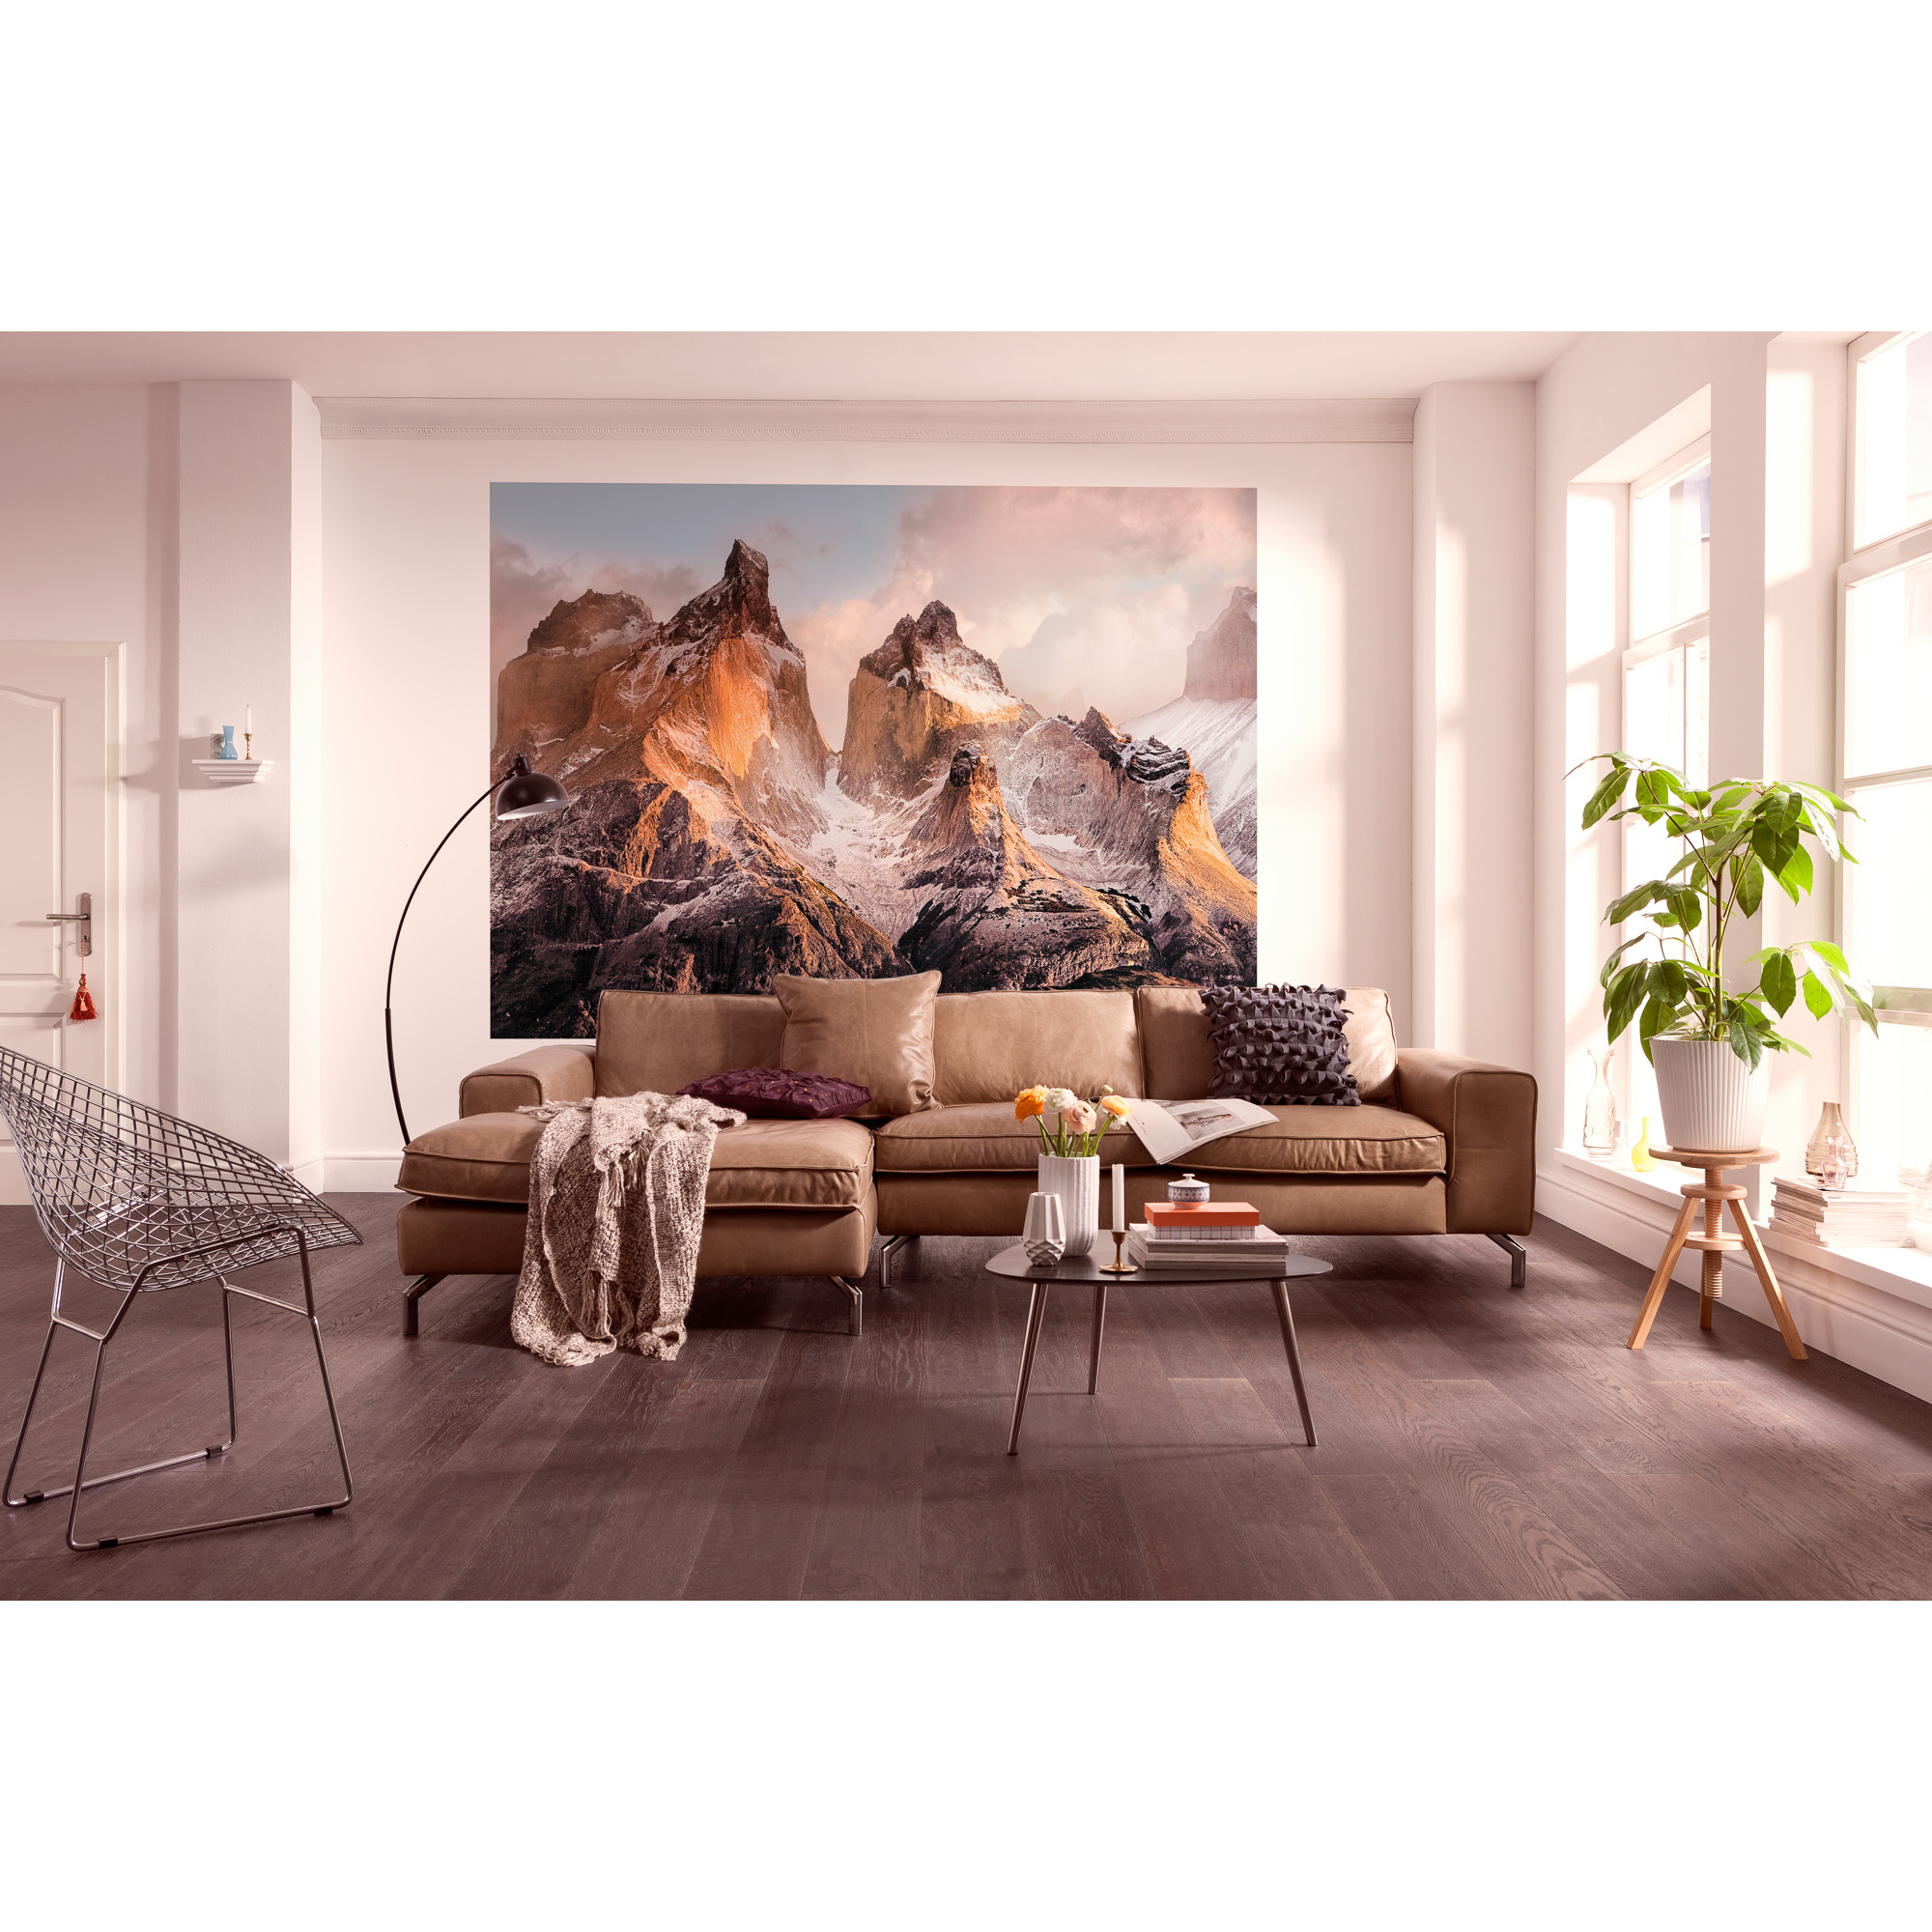 Fototapete 'Torres del Paine' 254 x 184 cm + product picture